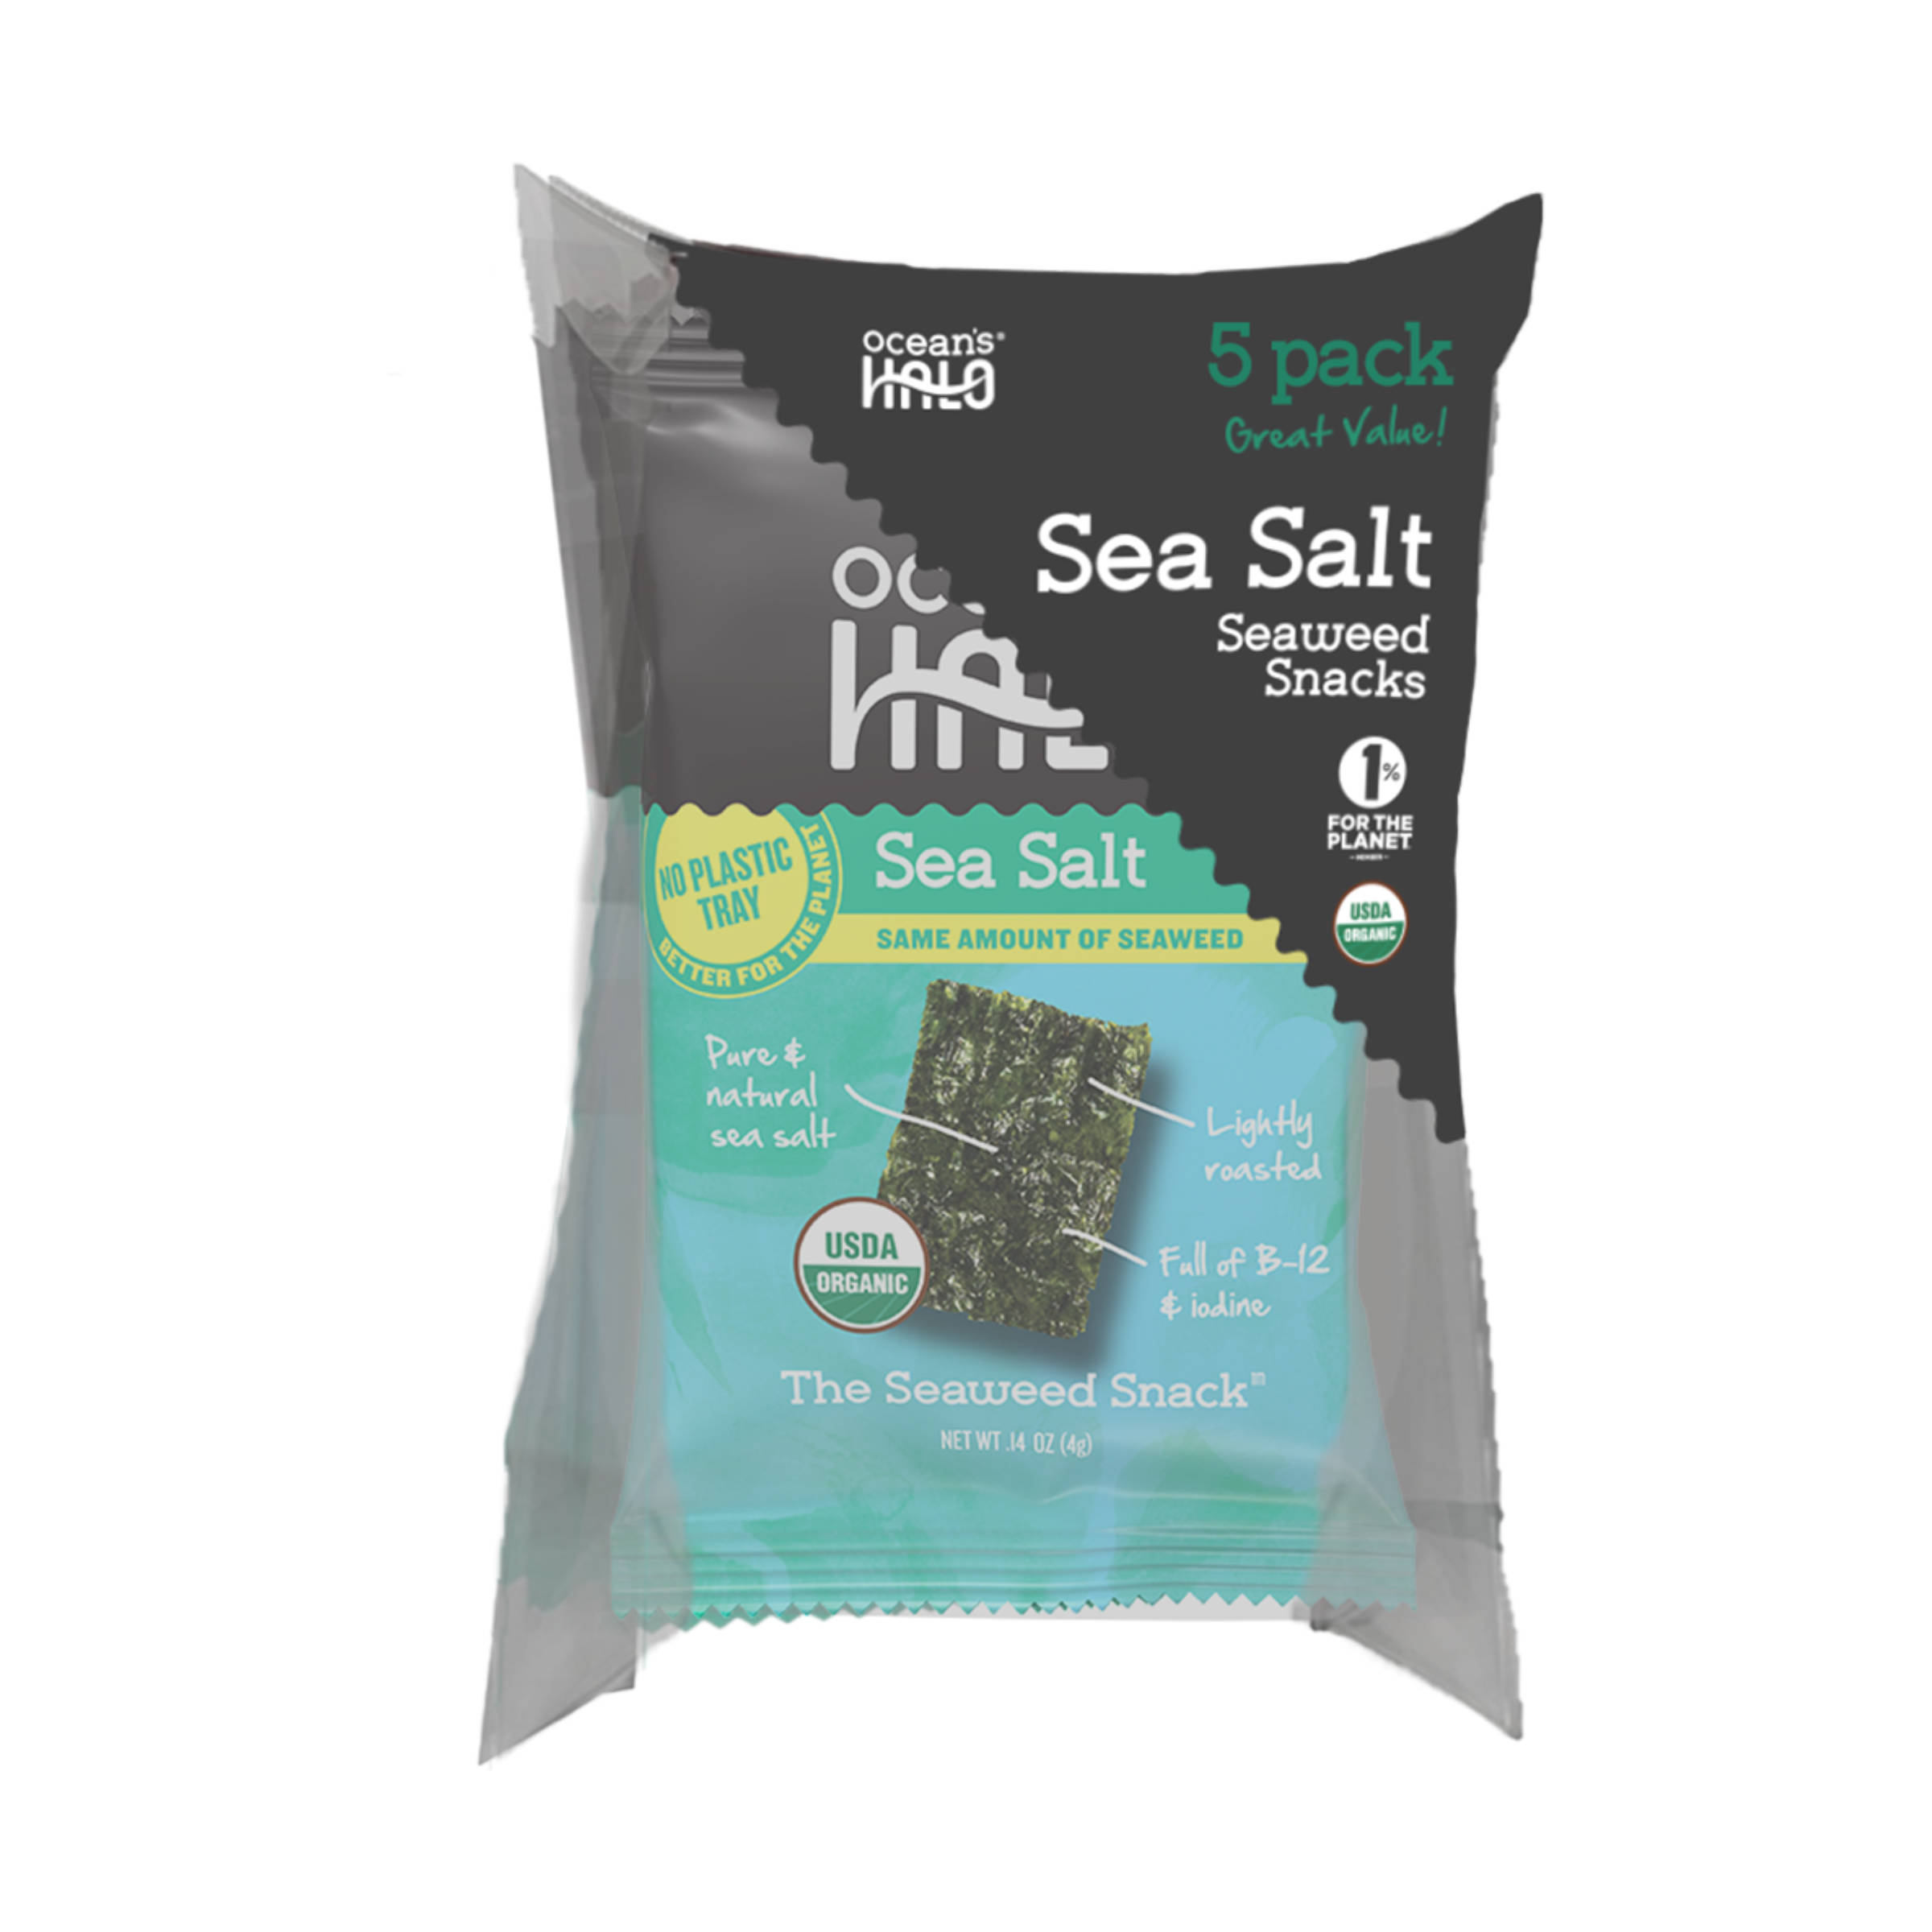 Trayless Sea Salt Seaweed Snack, 5 pk, 0.14oz each 4905